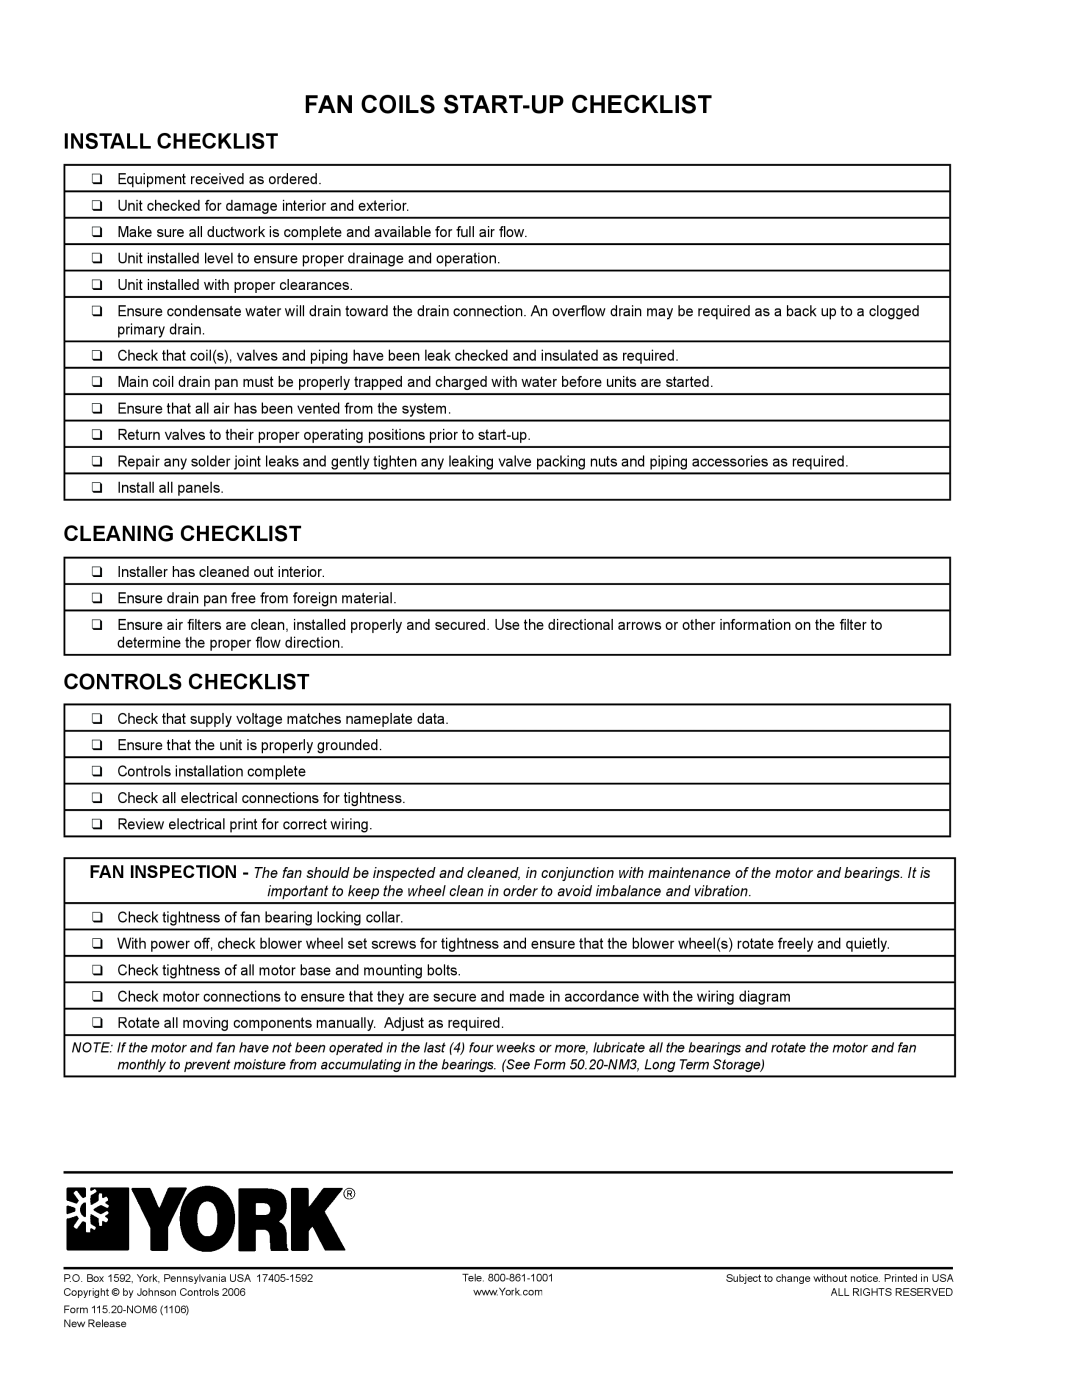 York LD11554, LD11556, LD11555 Fan Coils Start-Upchecklist, Install Checklist, Cleaning Checklist, Controls Checklist 